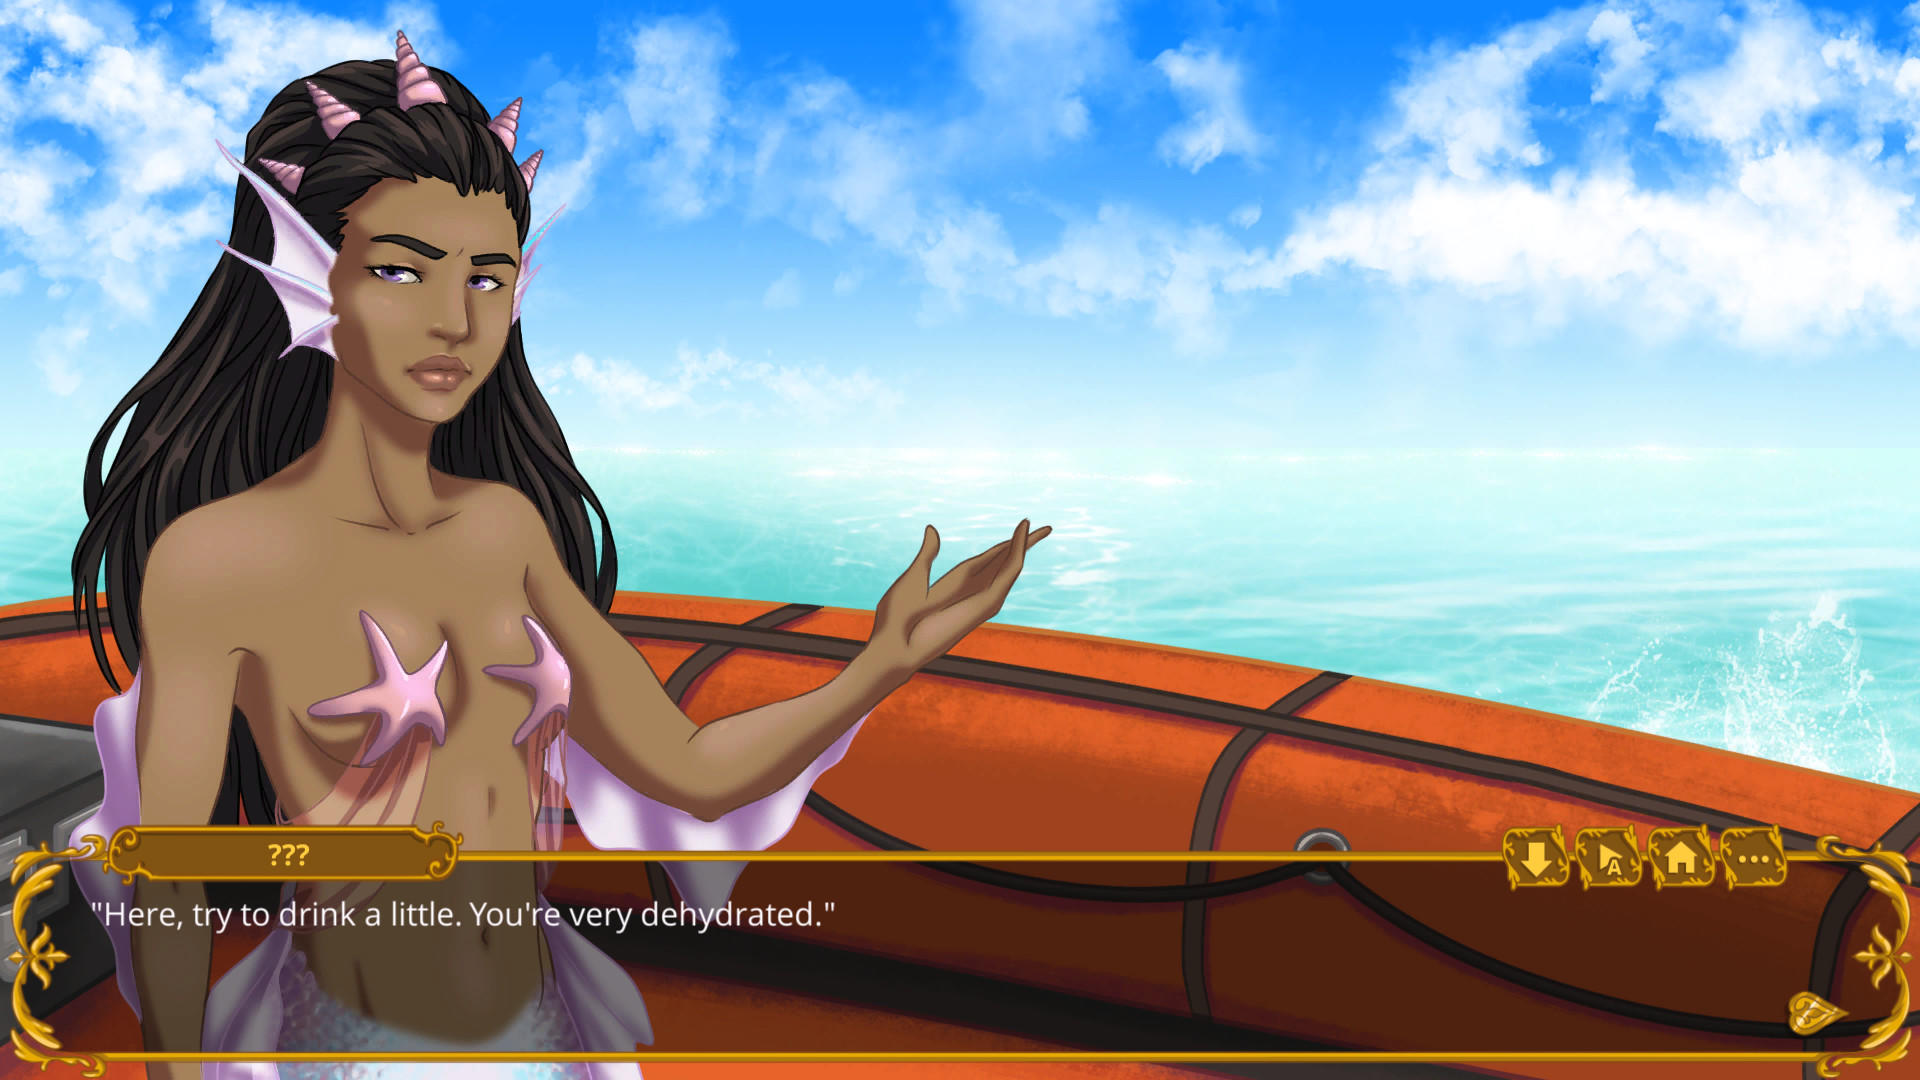 Love Mythos: Sanctuary Island screenshot game